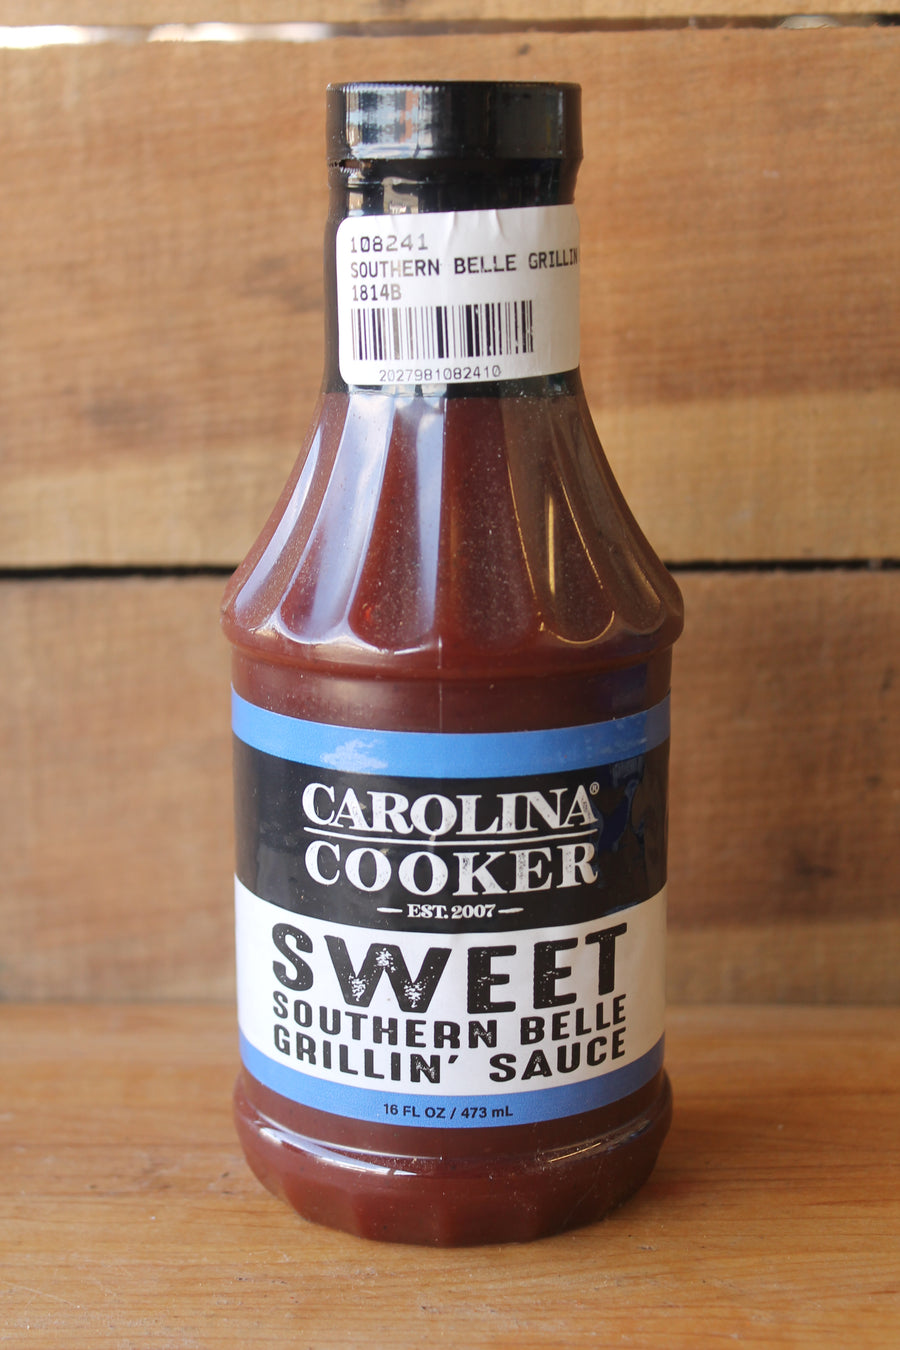 Carolina Cooker Southern Belle Grillin' Sauce